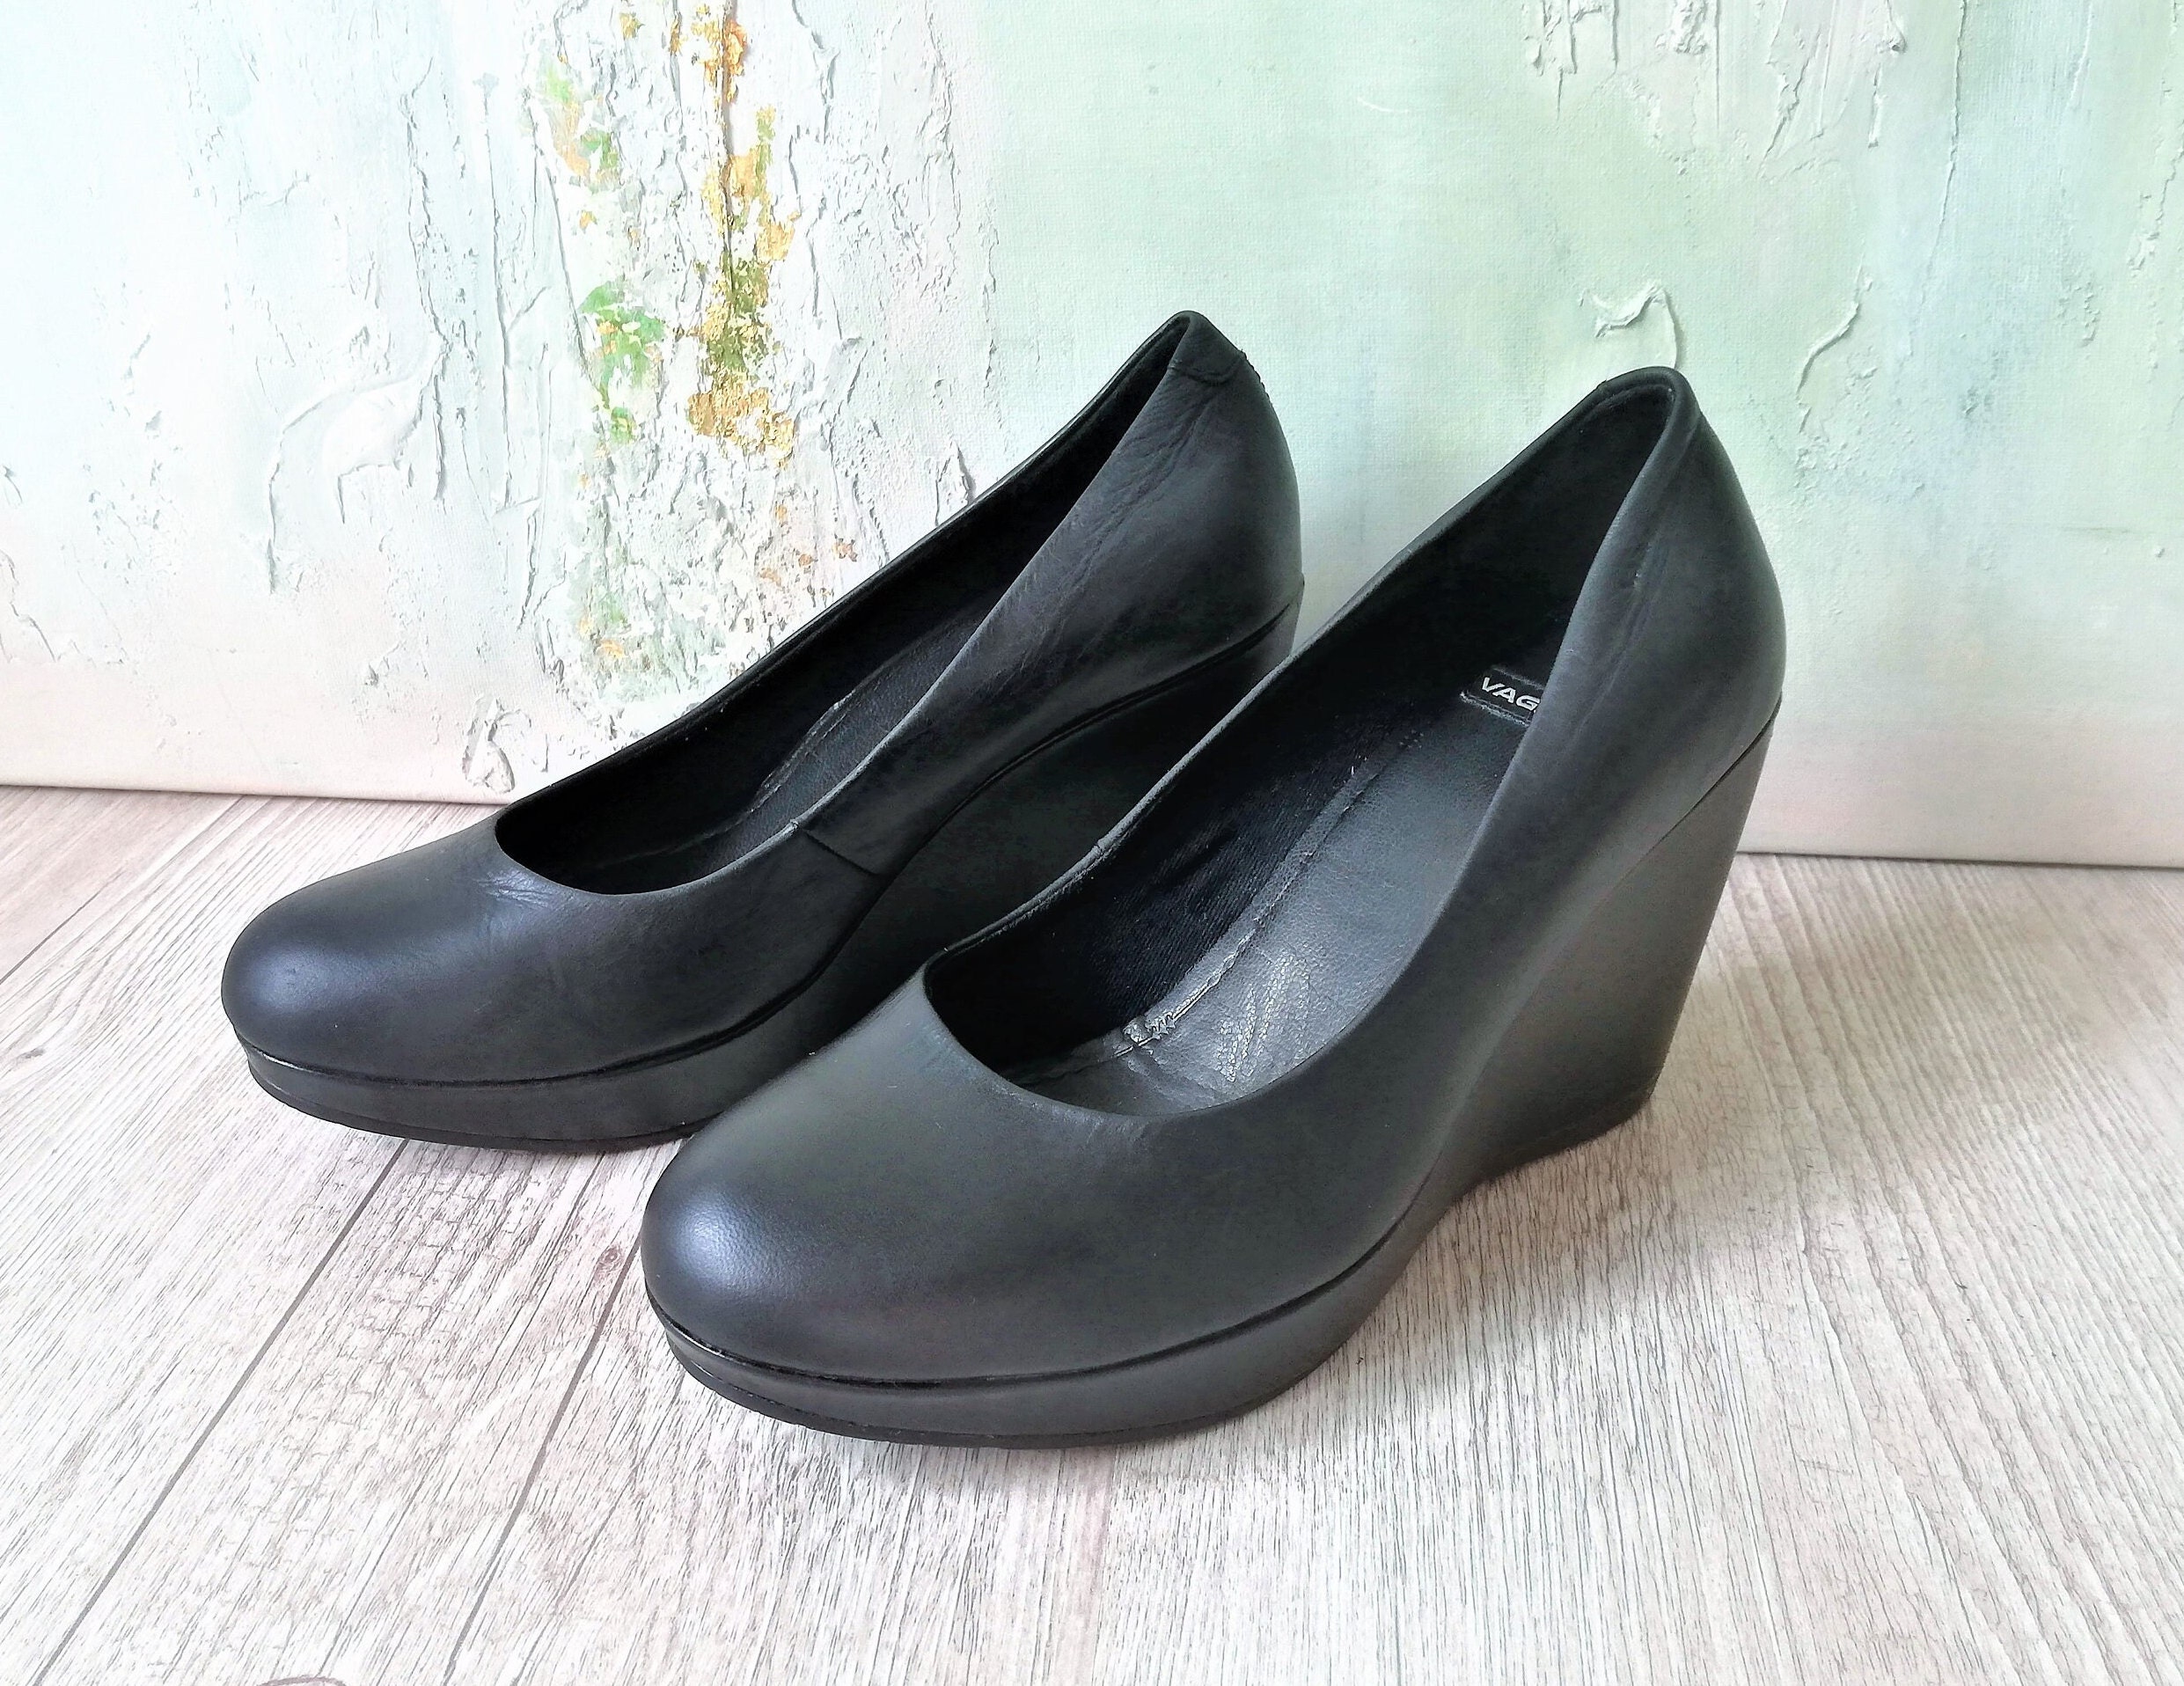 Vagabond Shoes Women Black Leather Wedge Heel Platform Shoes Size EU 36 /  UK 3.5 / US 6 Slip on Rounded Toe Platform Pumps - Etsy